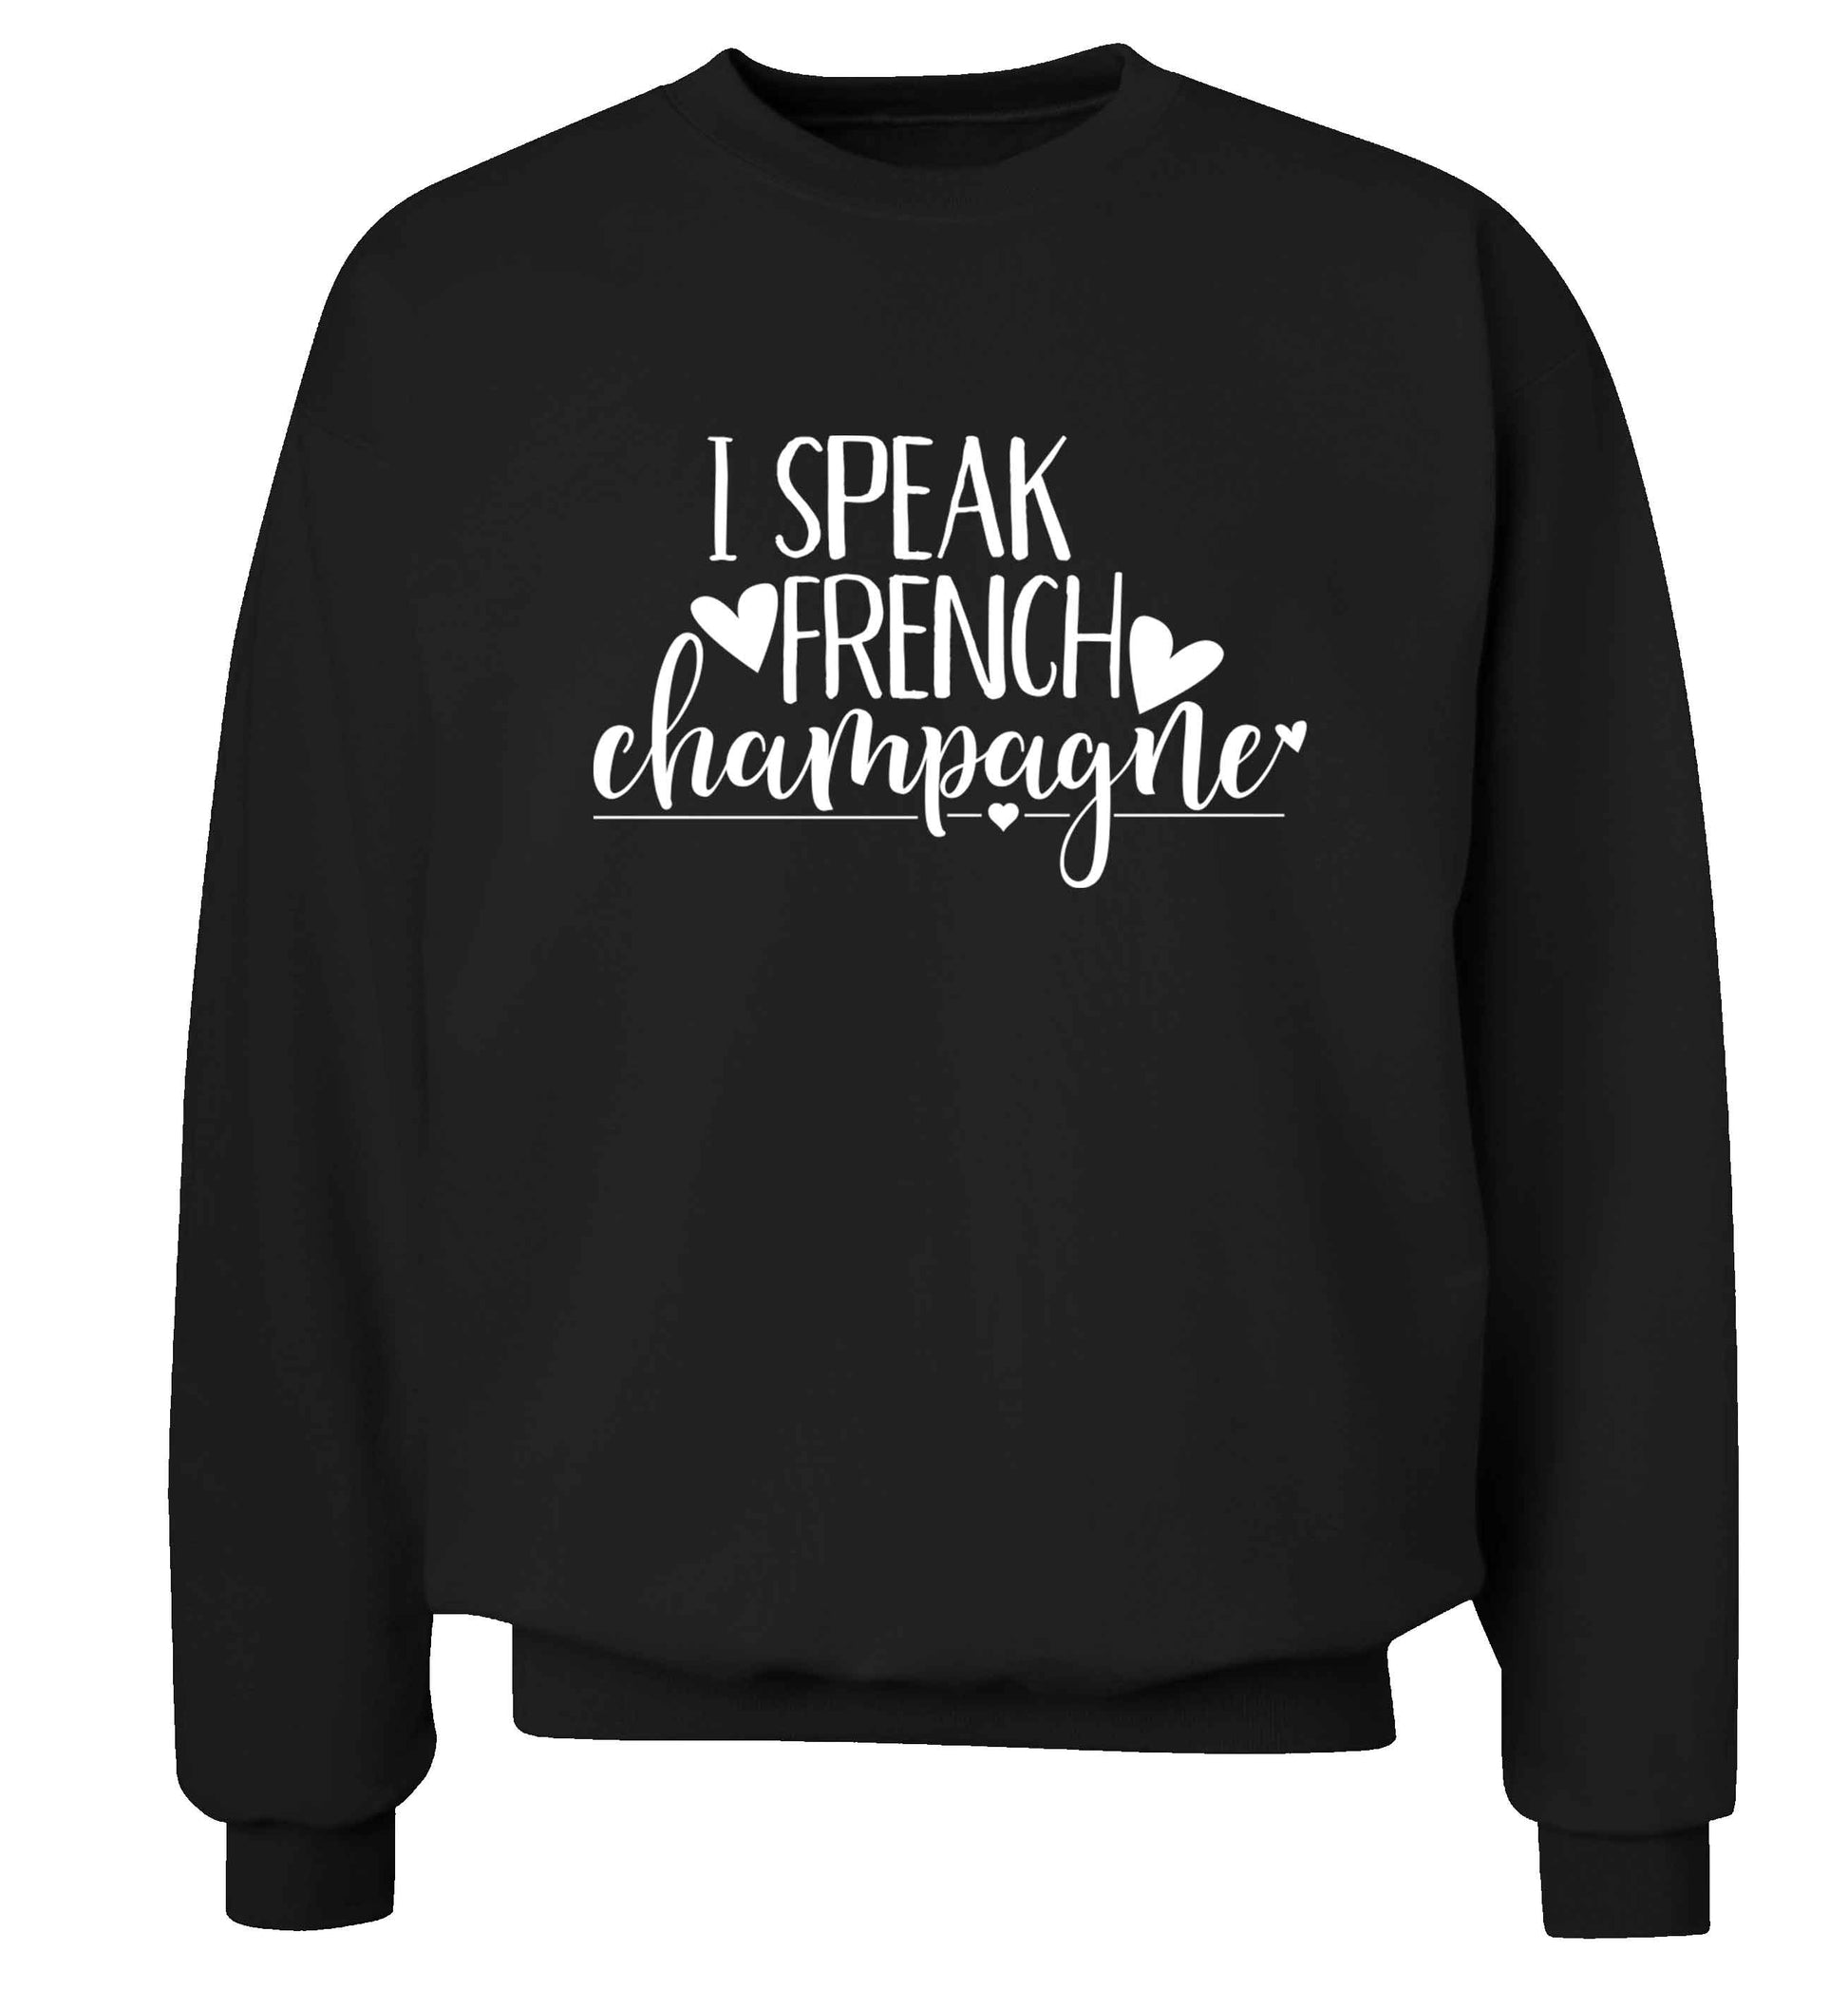 I speak french champagne Adult's unisex black Sweater 2XL